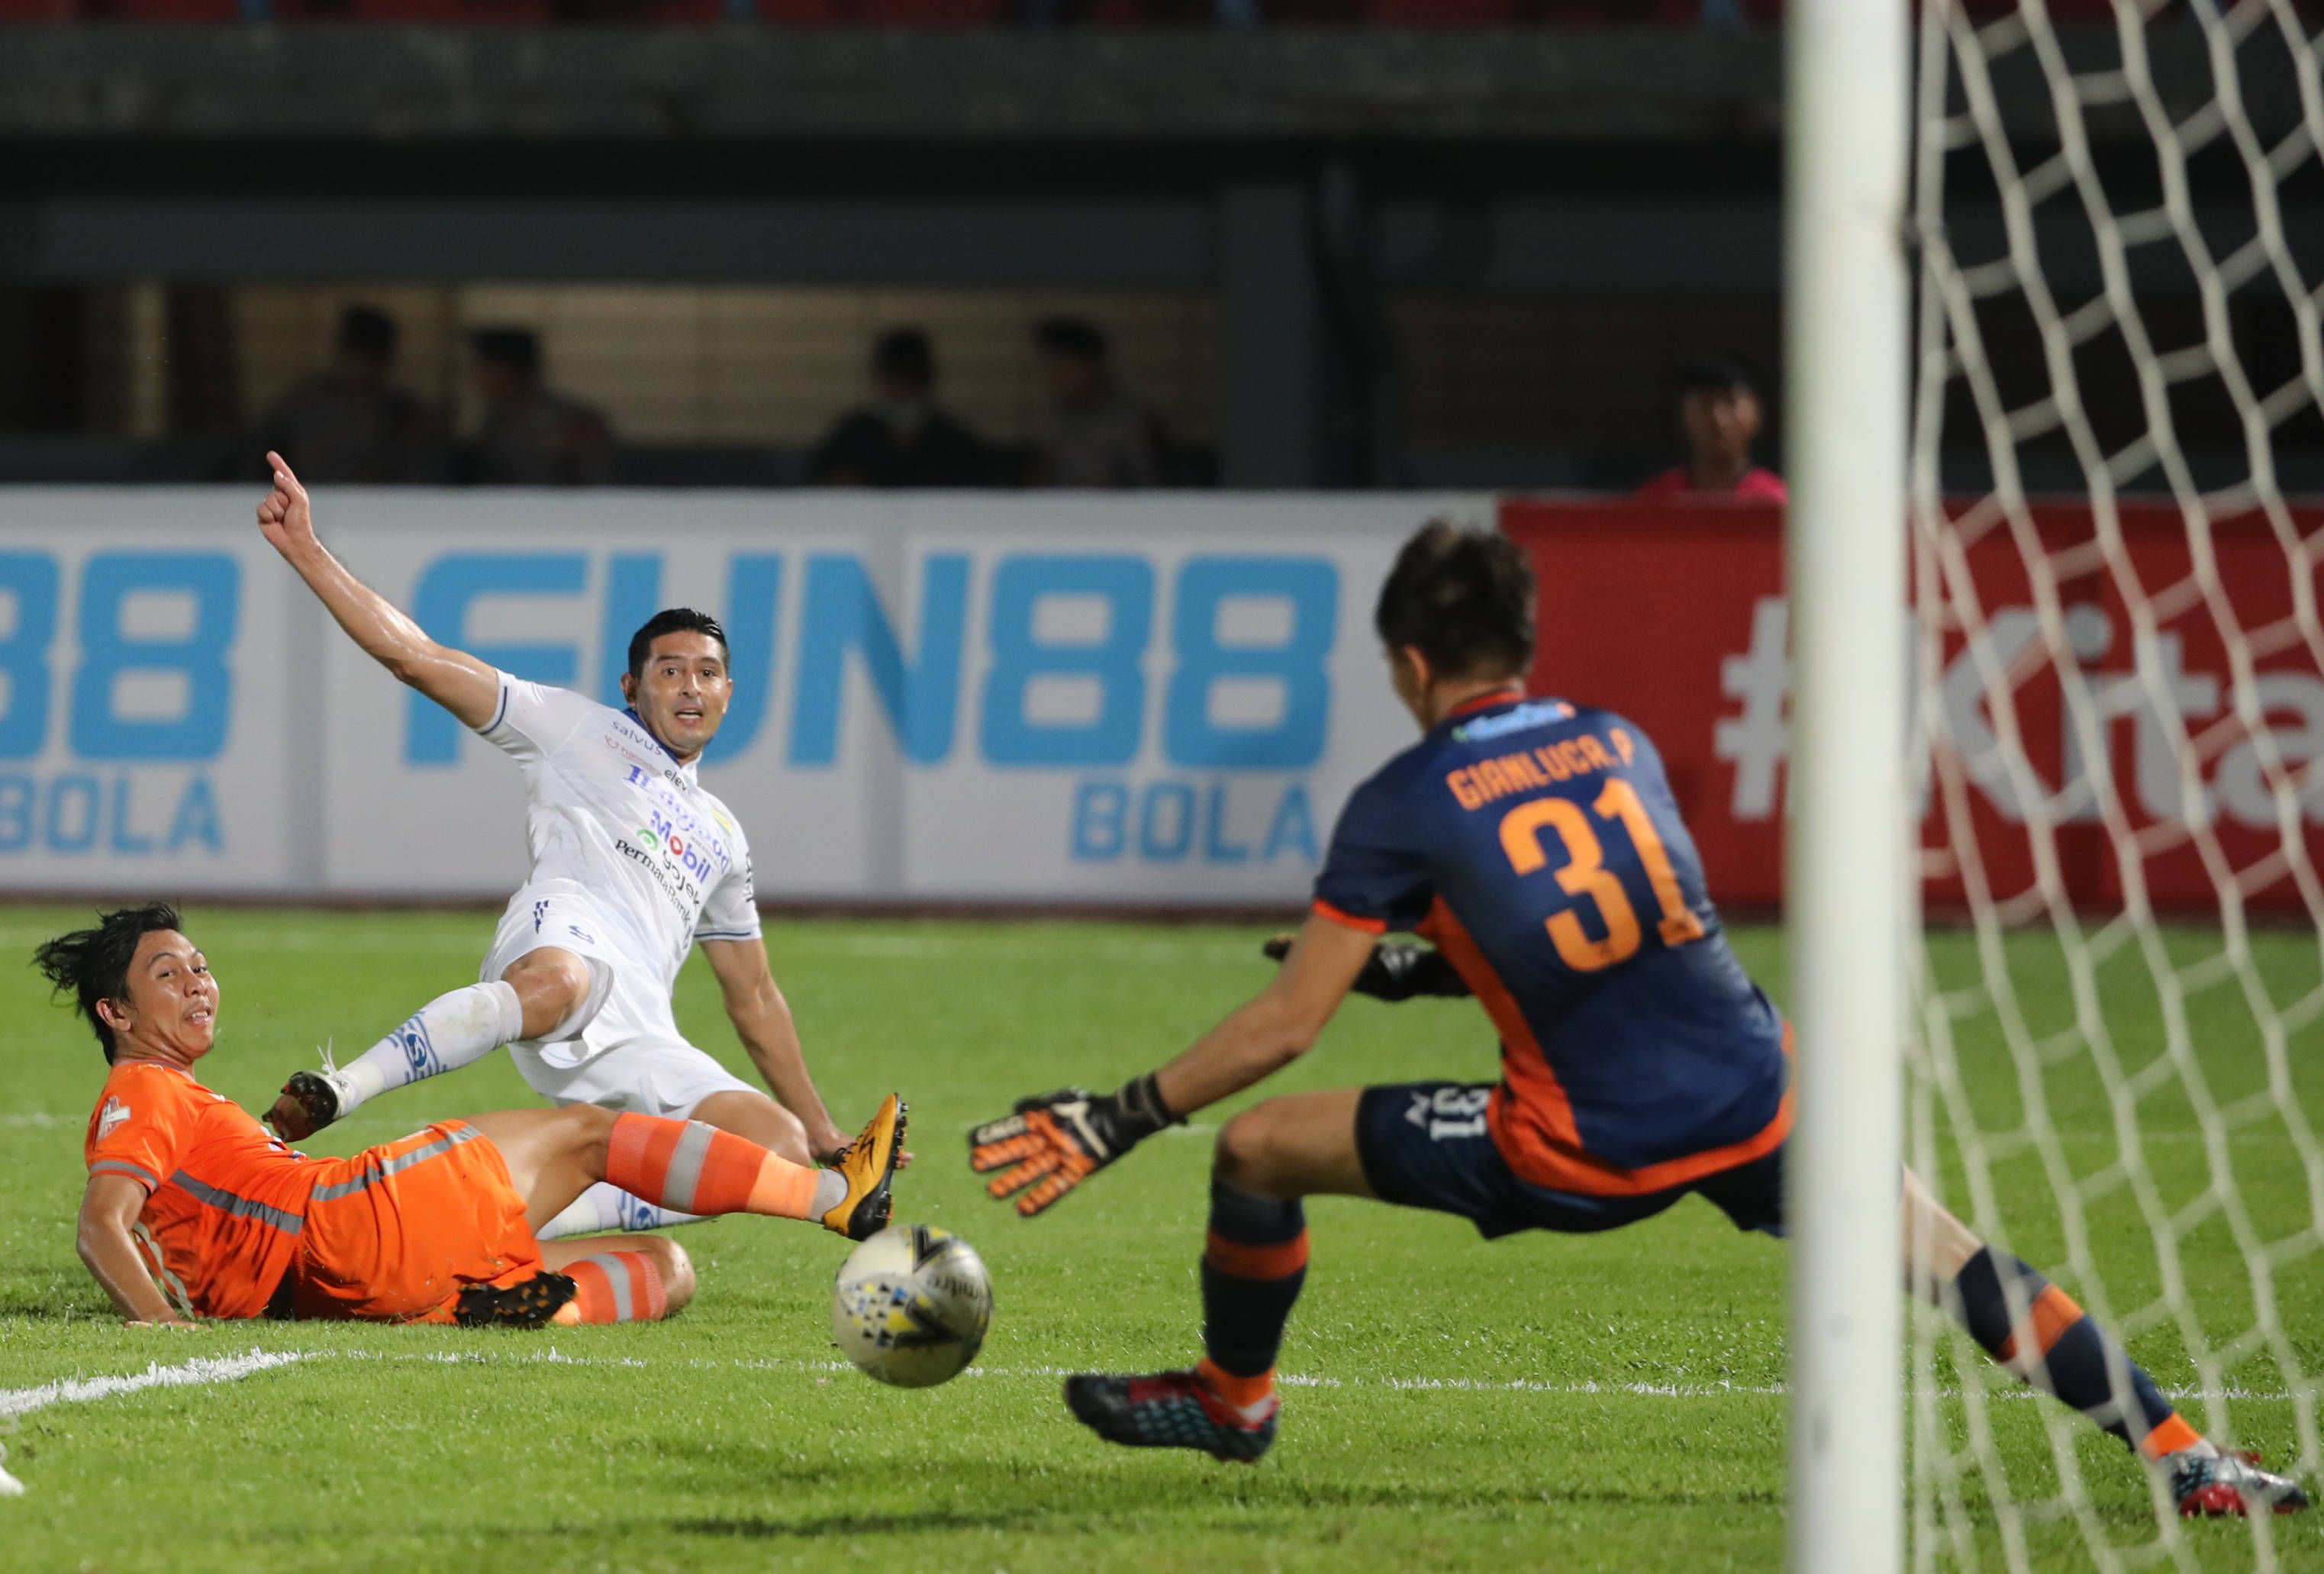 PEMAIN Persib Bandung Esteban Vizcarra melepaskan tendangan ke gawang Borneo FC pada pertandingan Shopee Liga 1 di Stadion Segiri, Samarinda, Kalimantan Timur, Rabu 11 Desember 2019.*